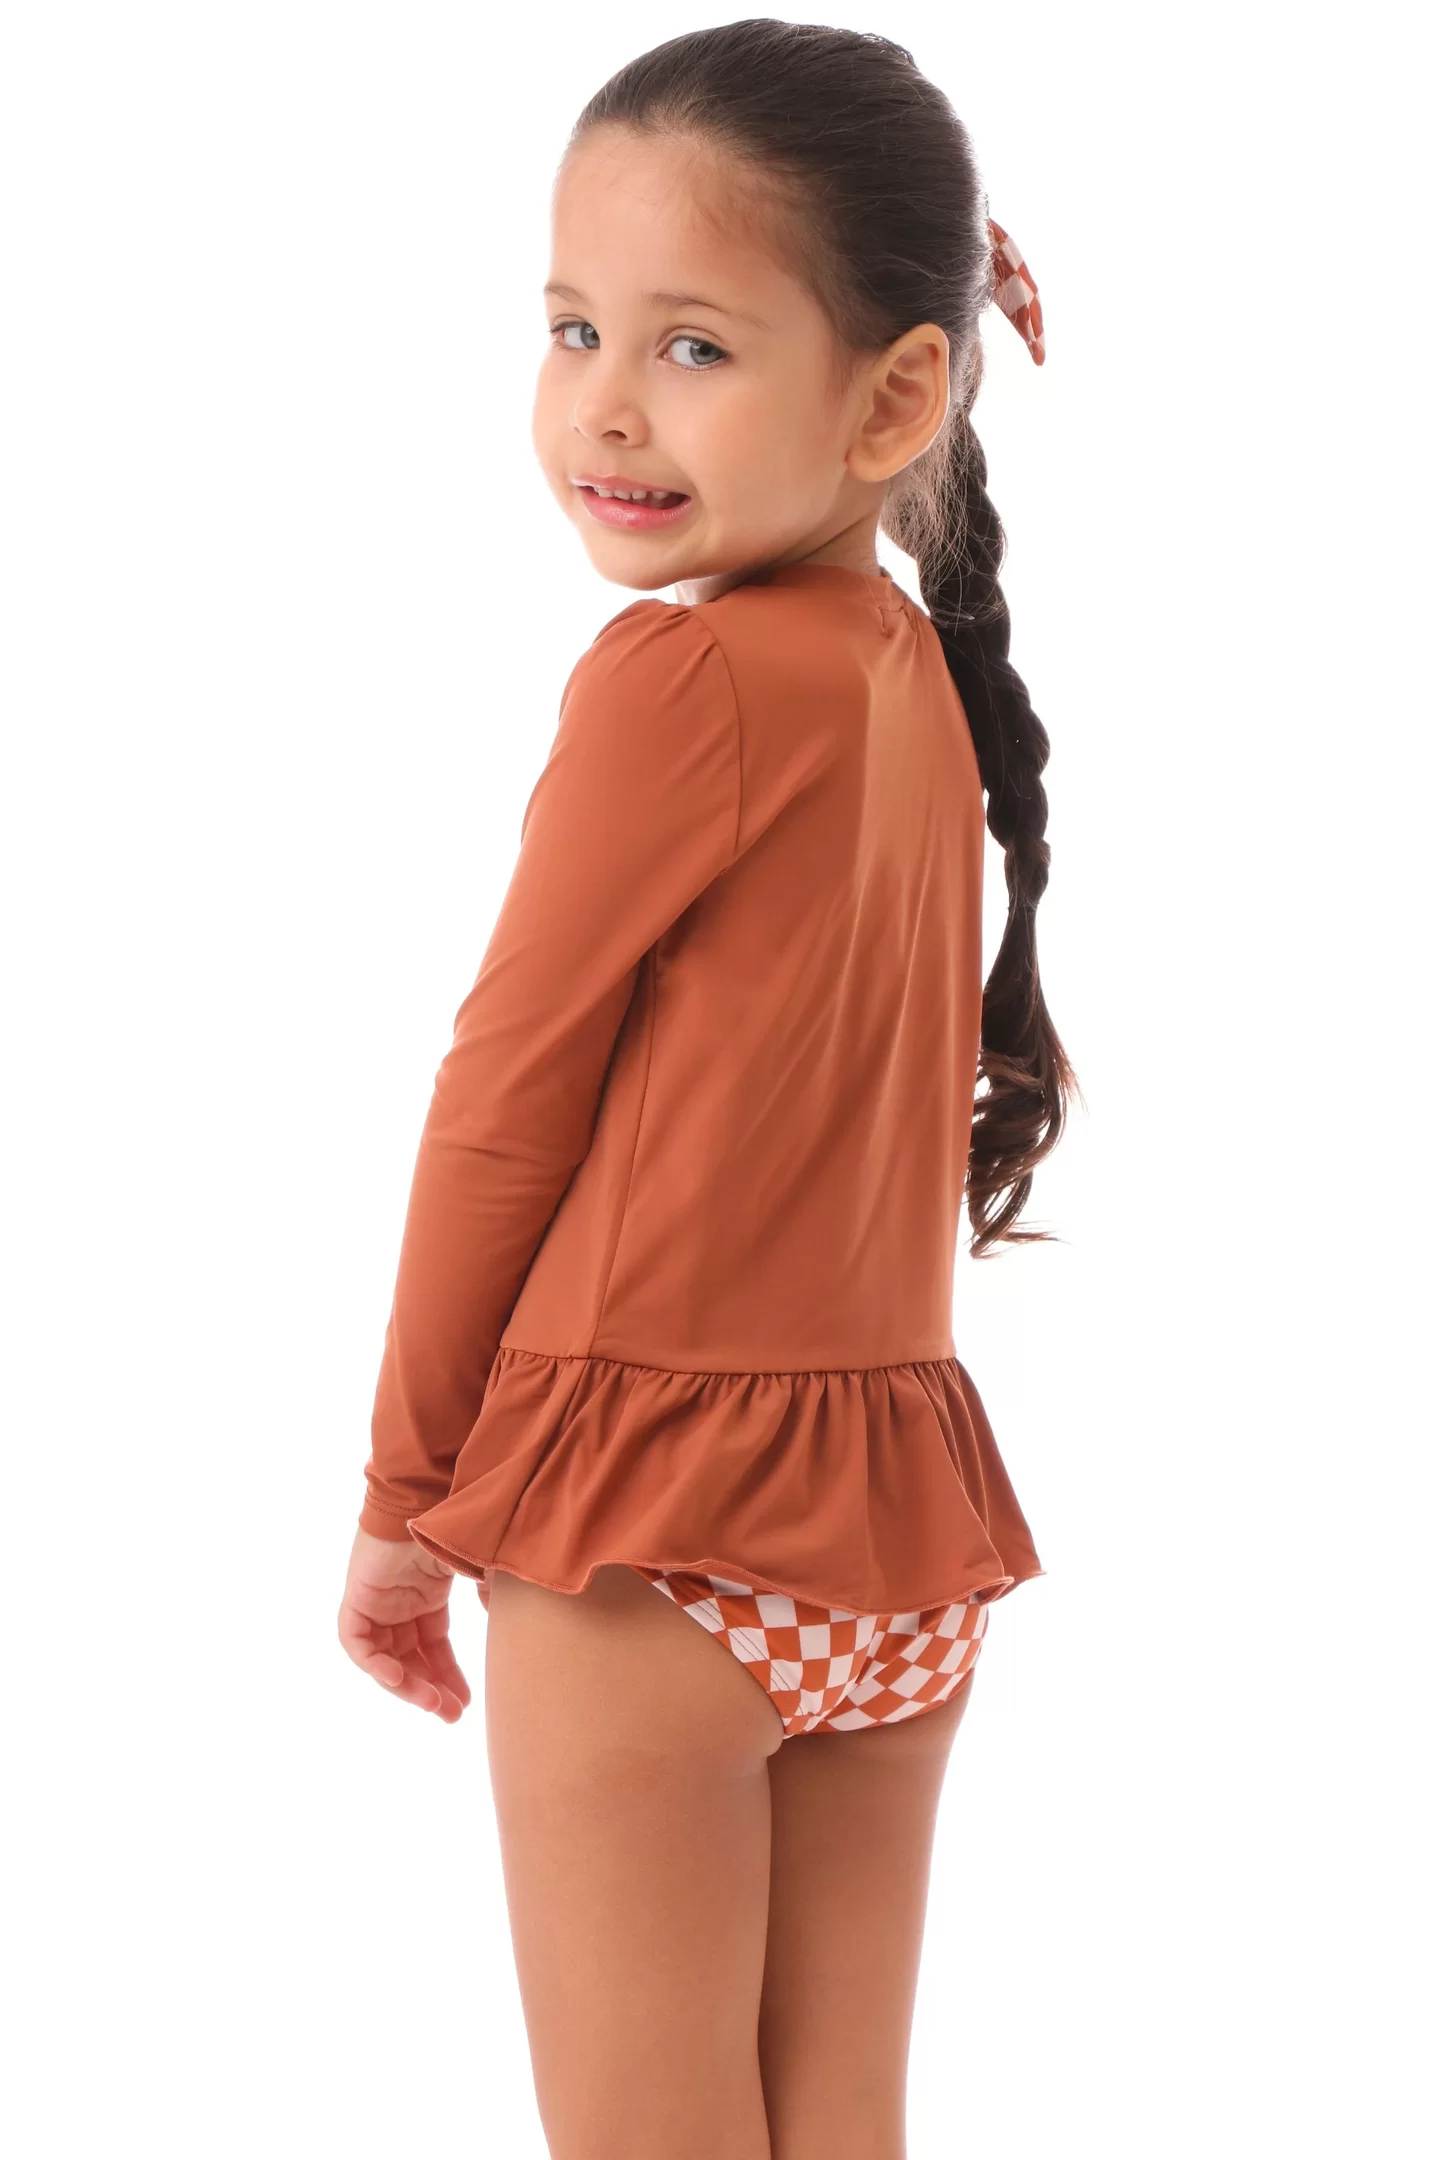 Camiseta Manga Longa Feminina Infantil UV50 Caramelo Mandarin Kids Fun